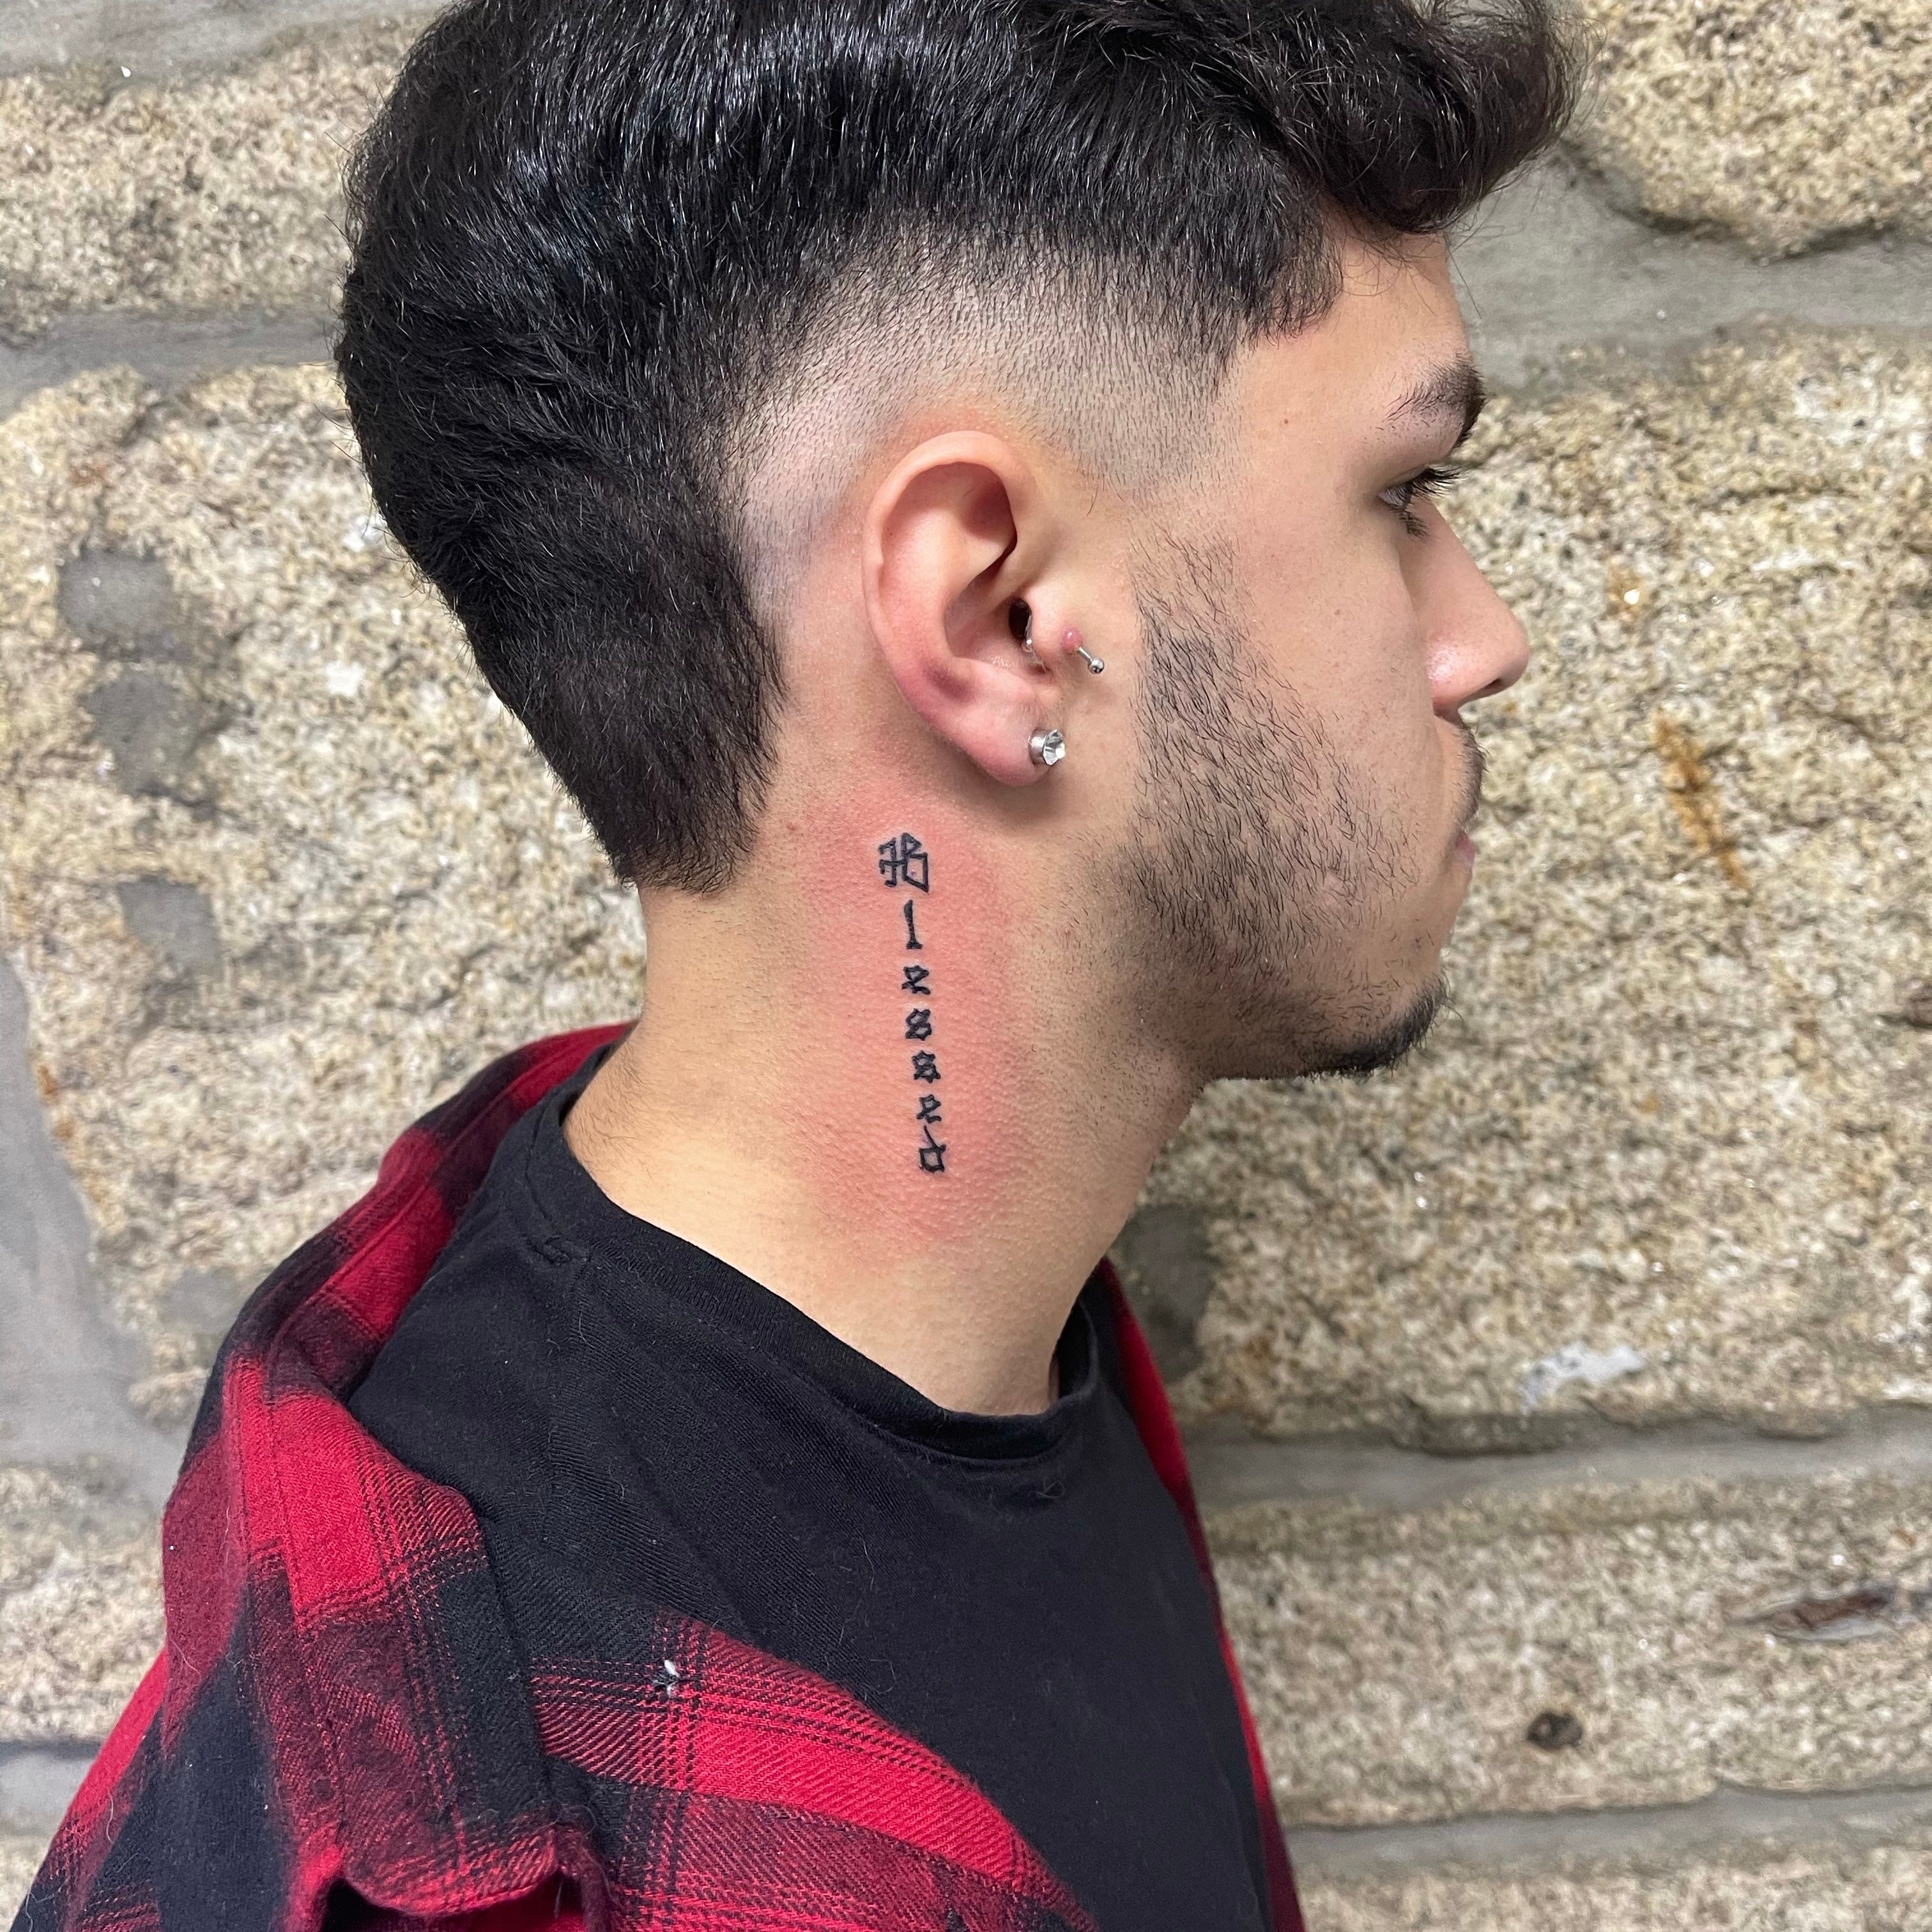 20 Behind The Ear Word Tattoos